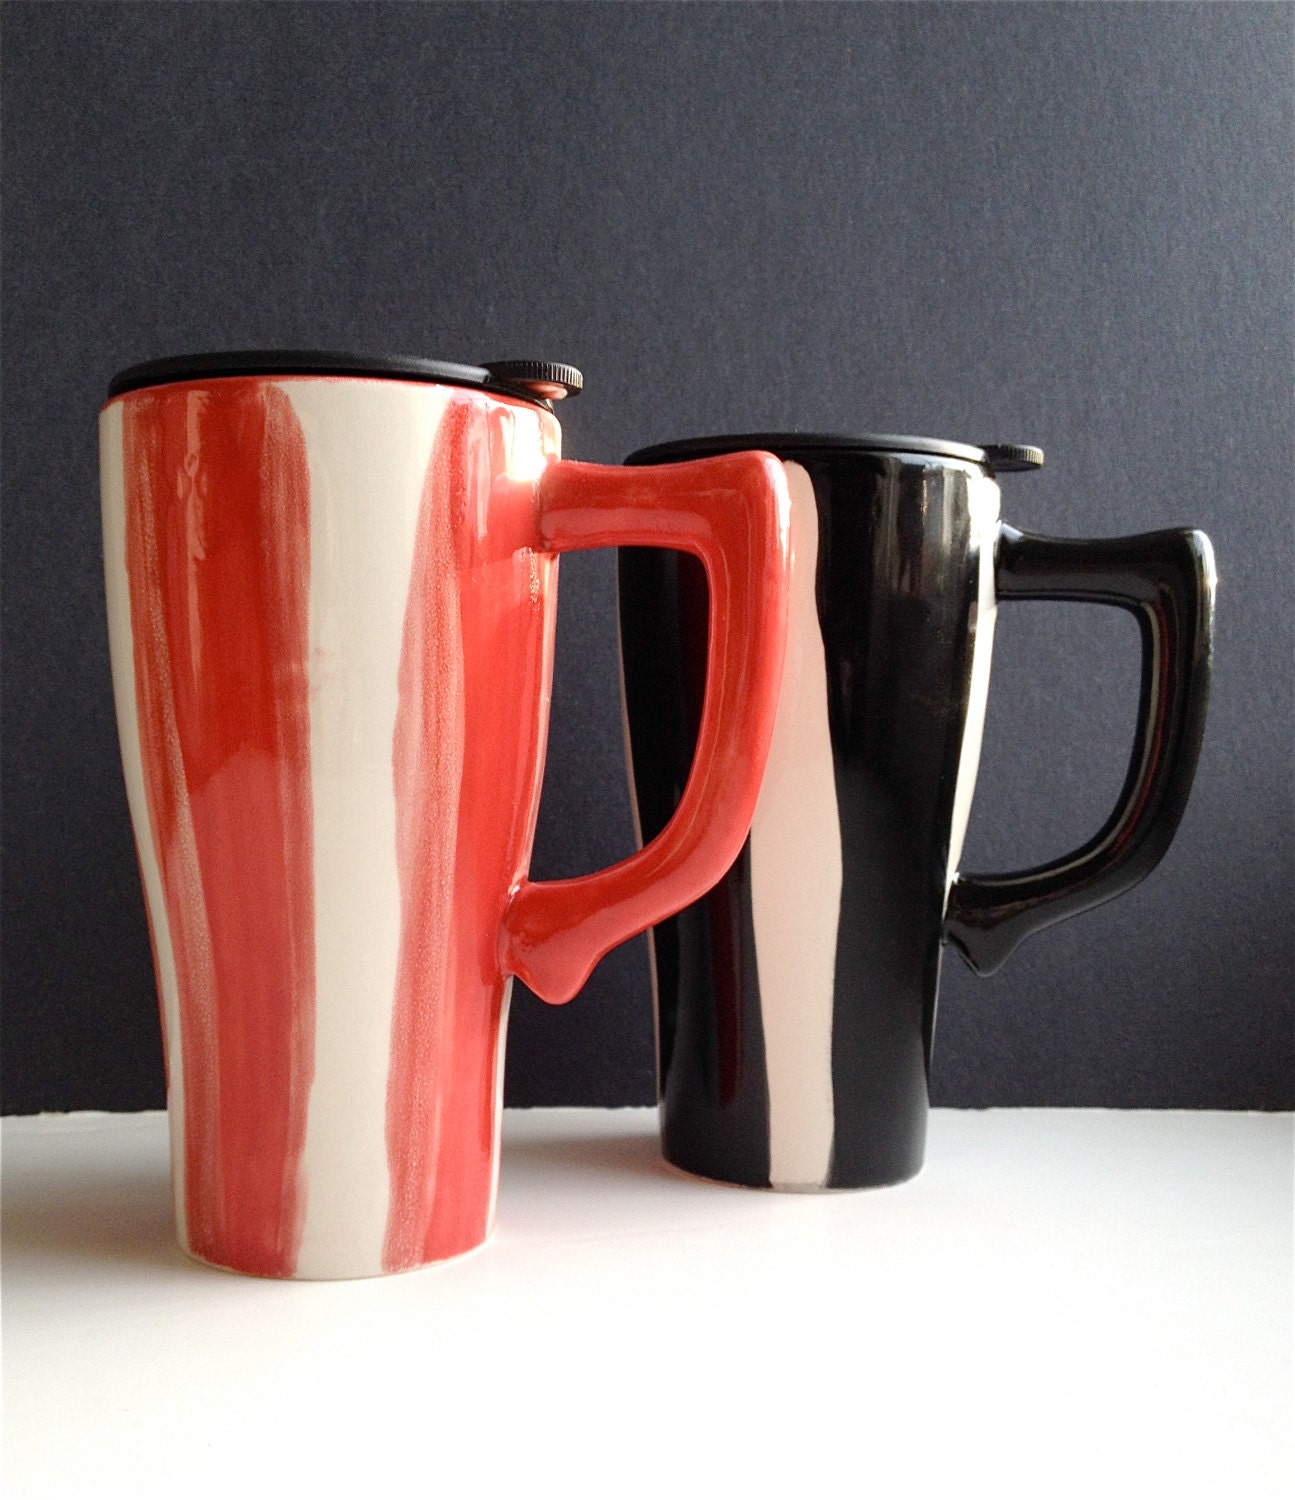 MR.R Set of 6 Sublimation Blanks Dishwasher White Ceramic Coffee Mugs 11oz Blank Ceramic Classic Drinking Cup Mug for Milk Tea Cola Water